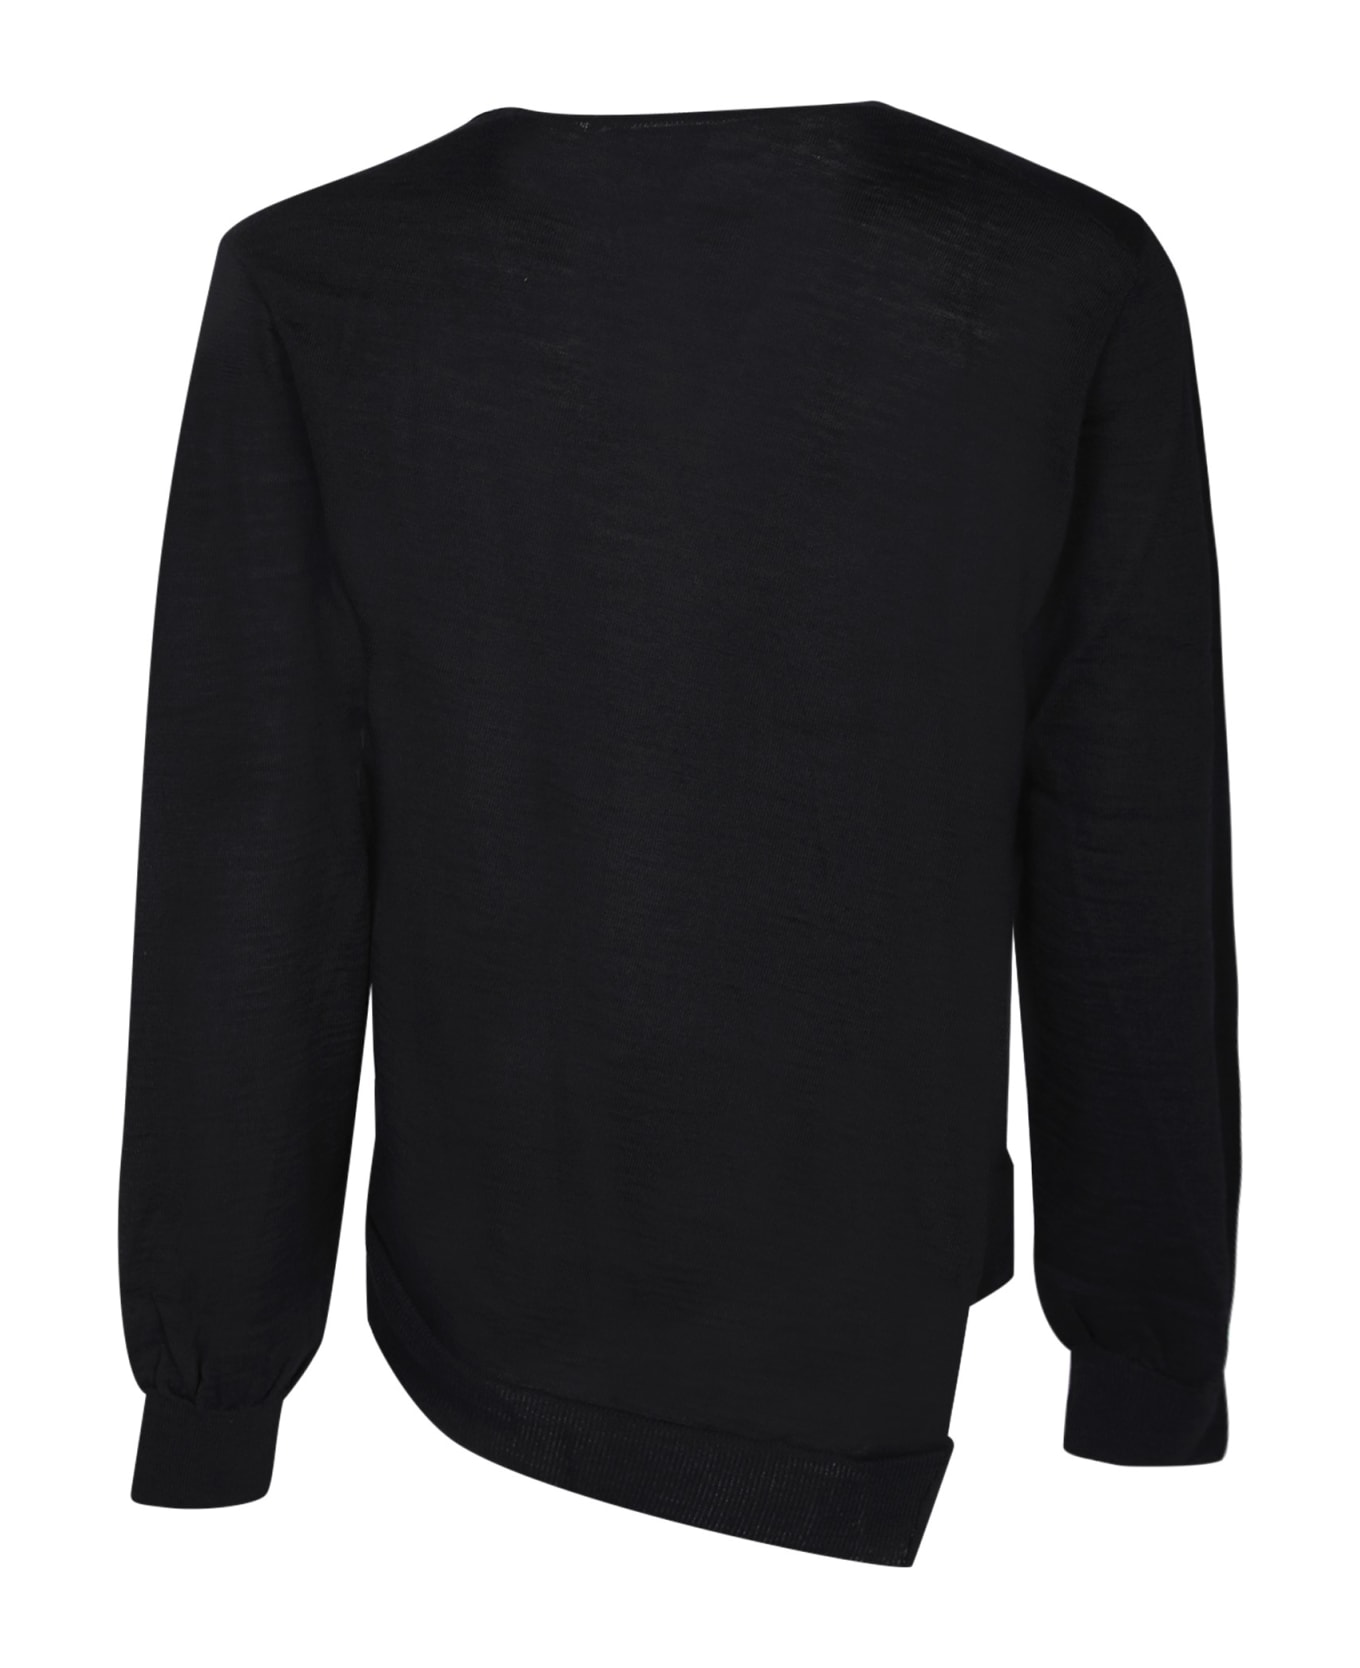 Comme des Garçons Shirt Asymmetric Black Pullover - Black フリース